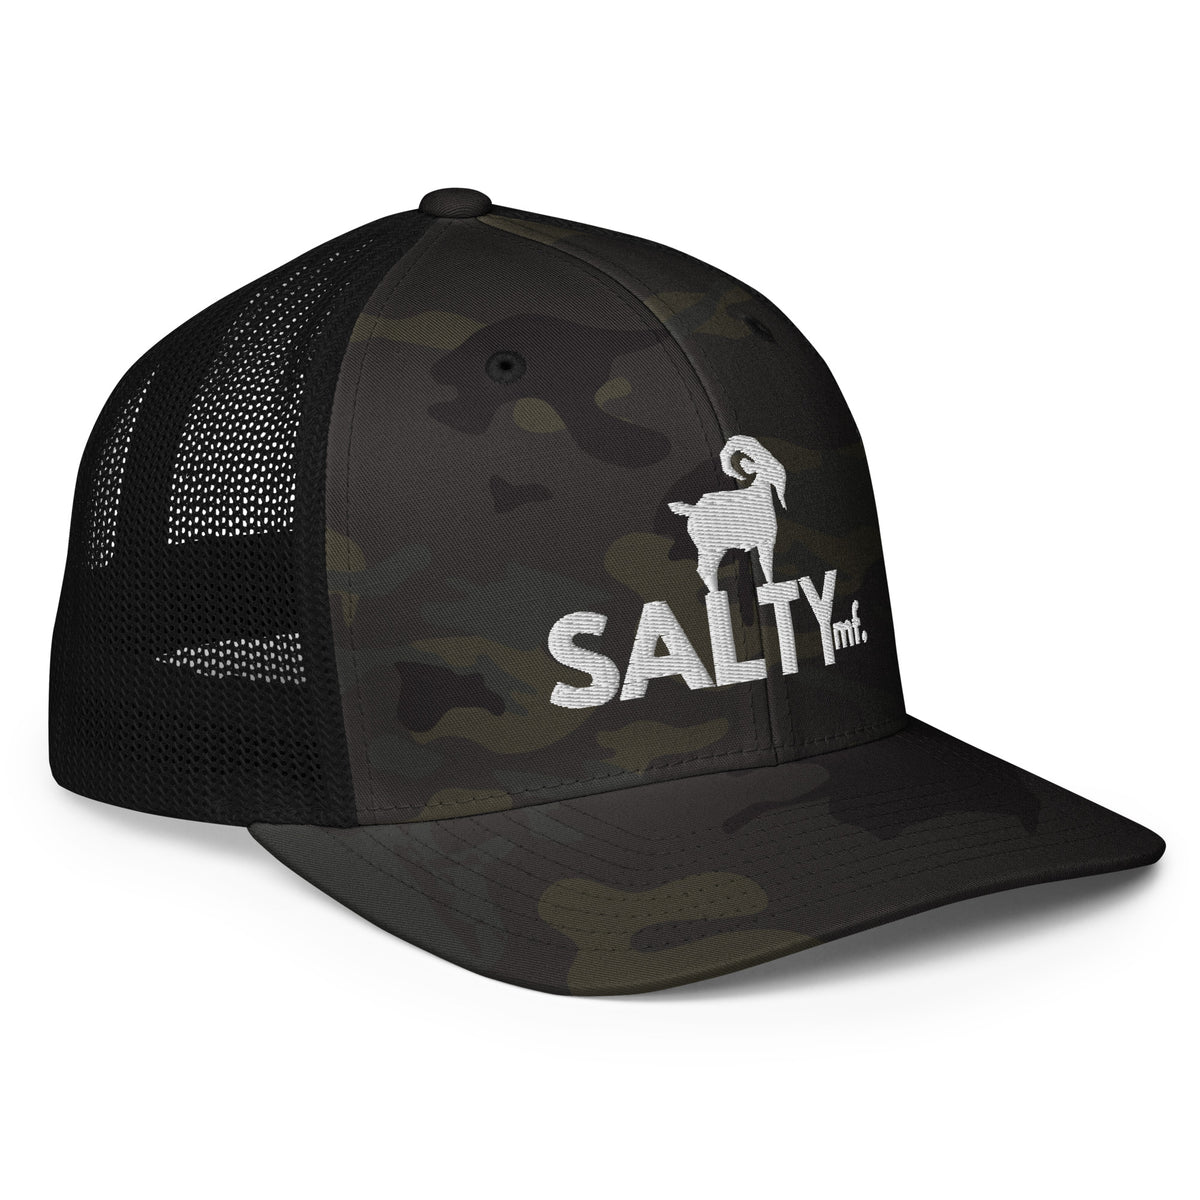 Saltymf Black/Black Multicam – SALTYmf Trucker